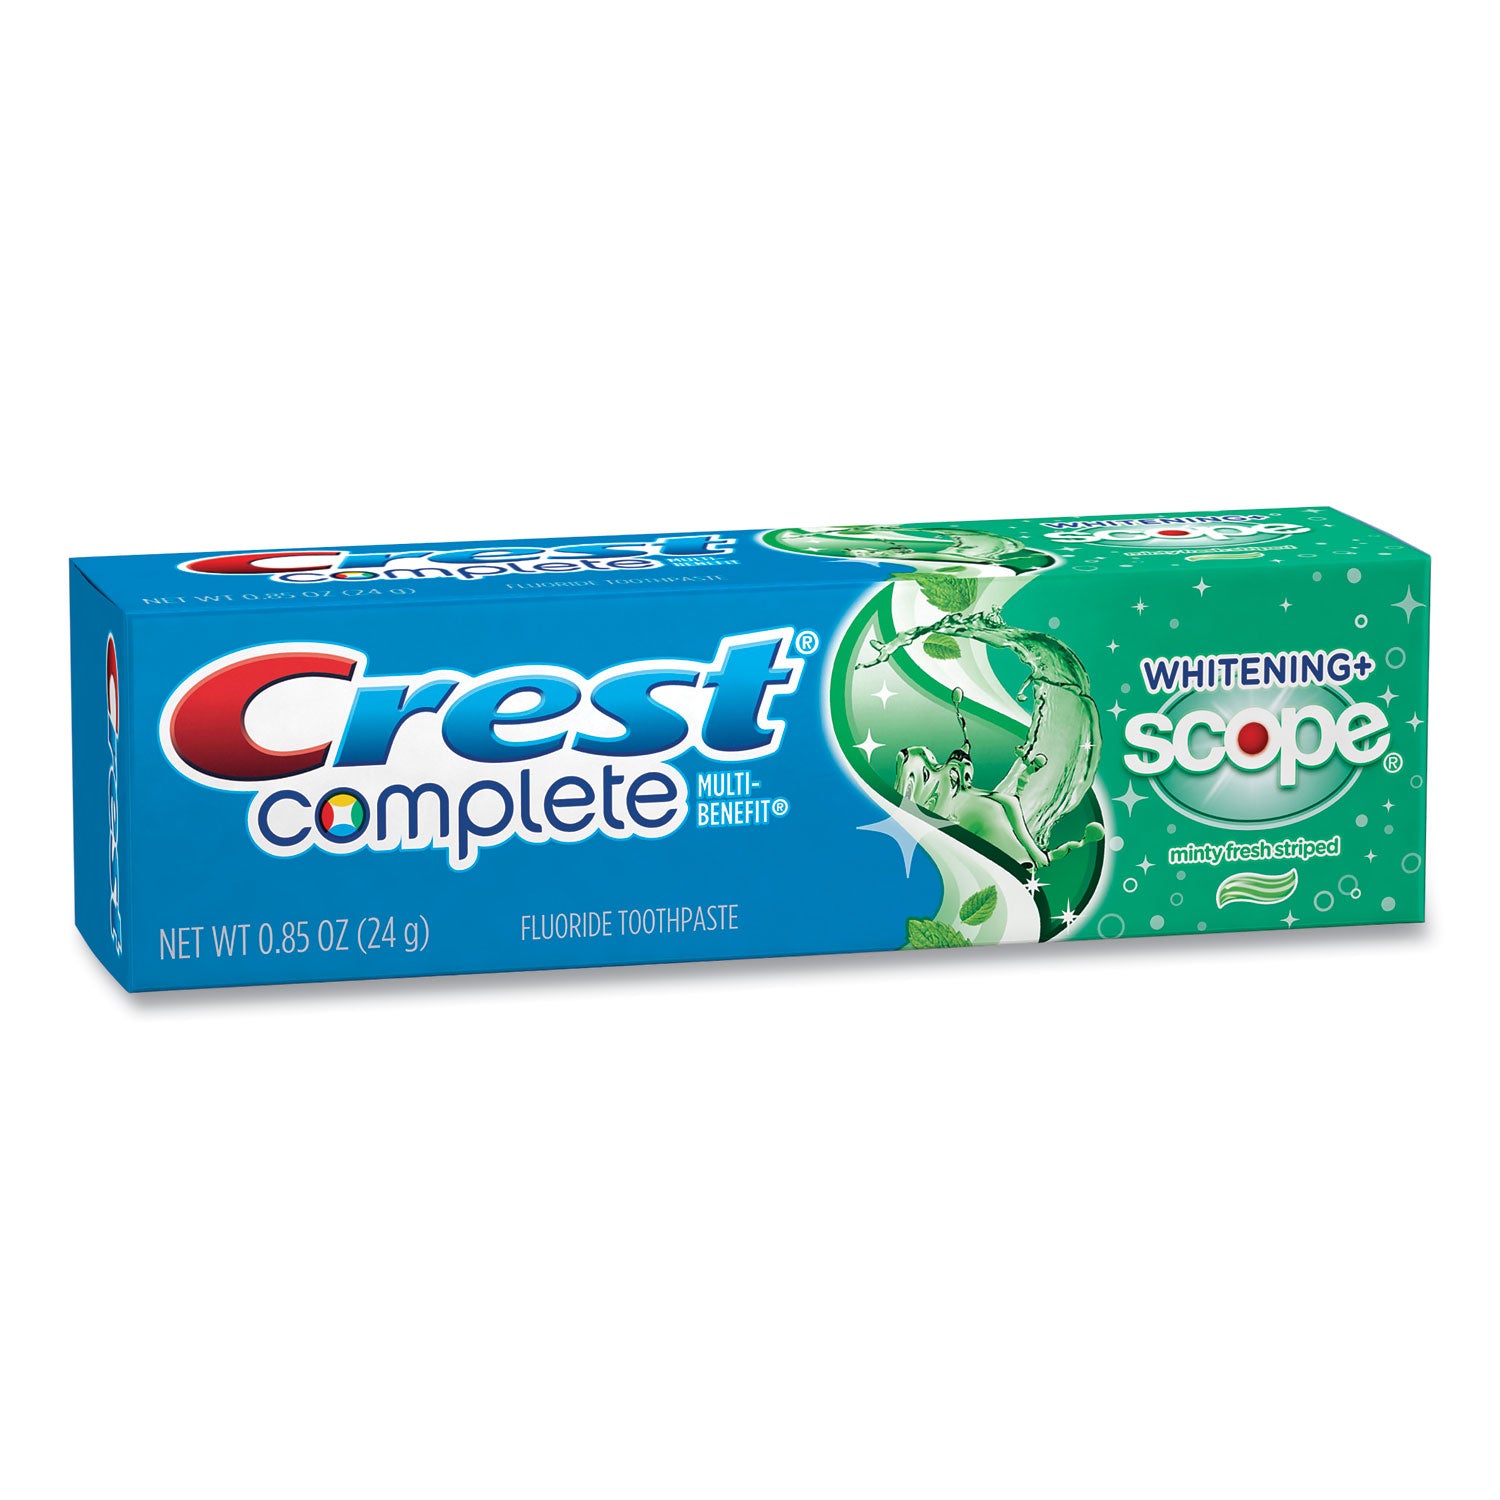 complete-whitening-toothpaste-+-scope-minty-fresh-085-oz-tube-36-carton_pgc38592ct - 1